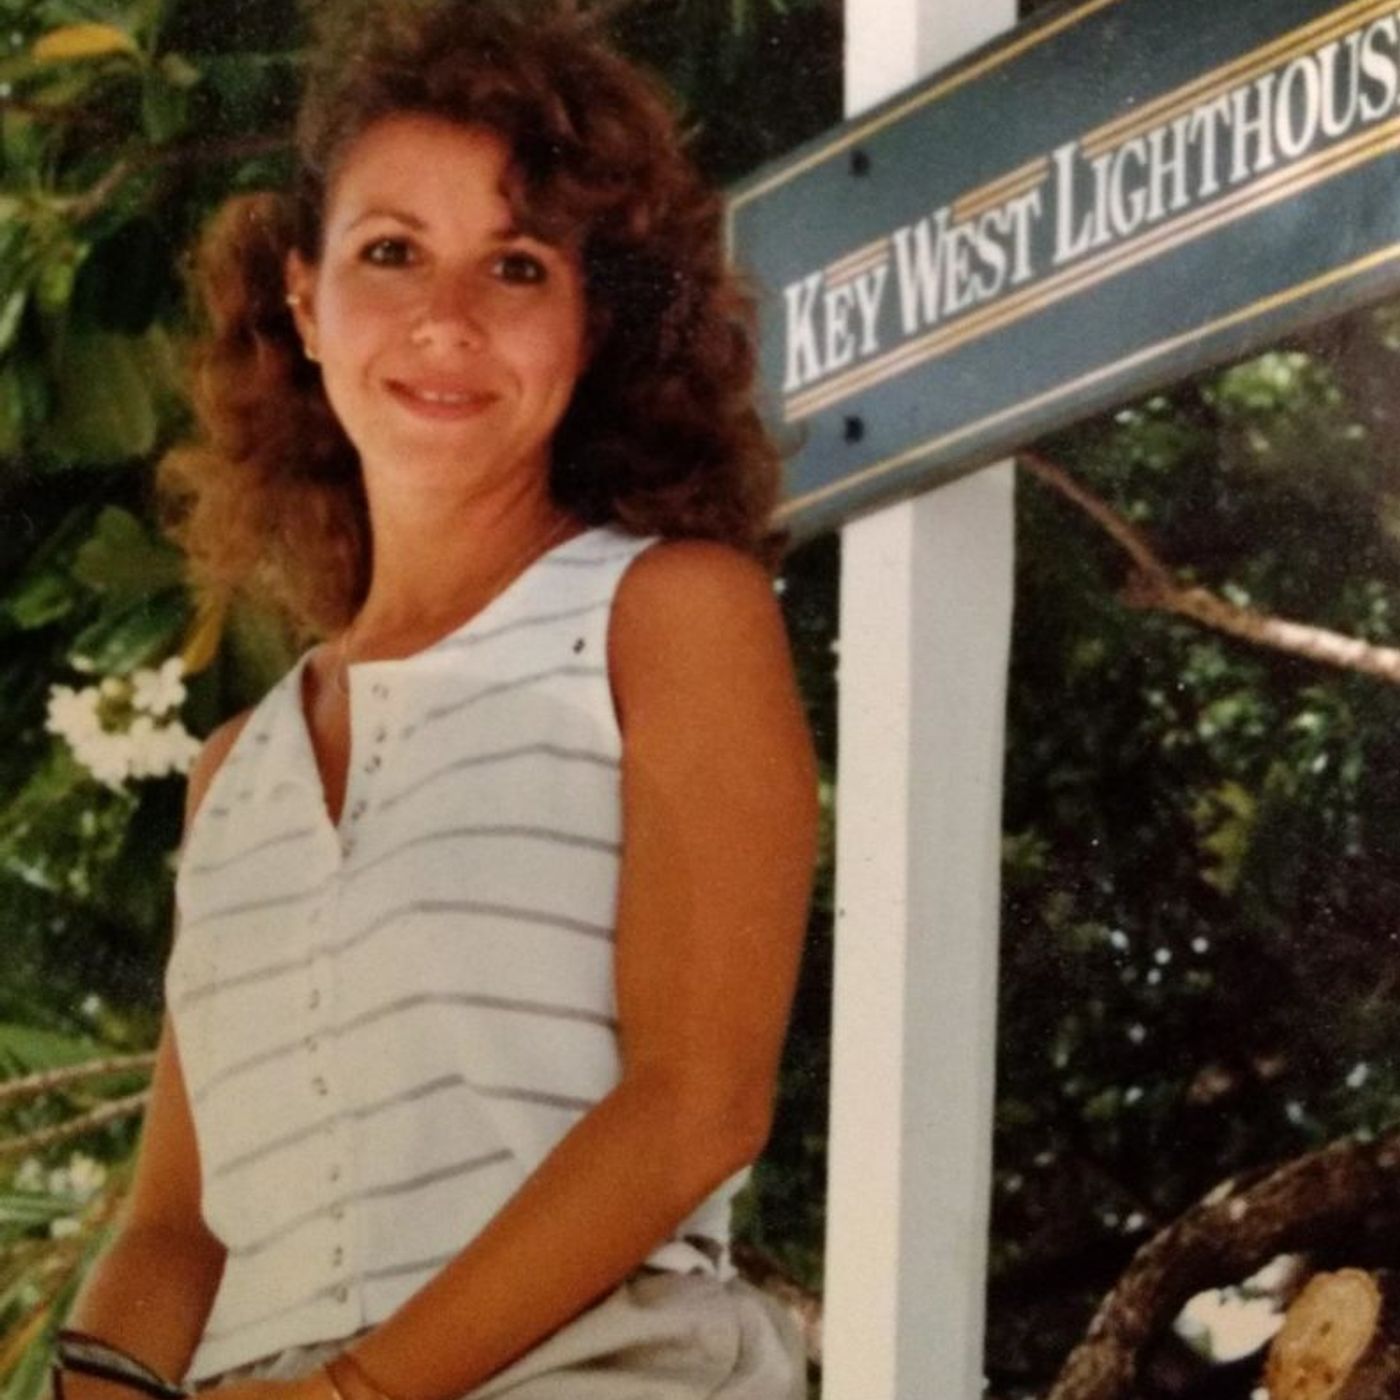 Kathy Kleiner - Living victim of attack by serial killer Ted Bundy